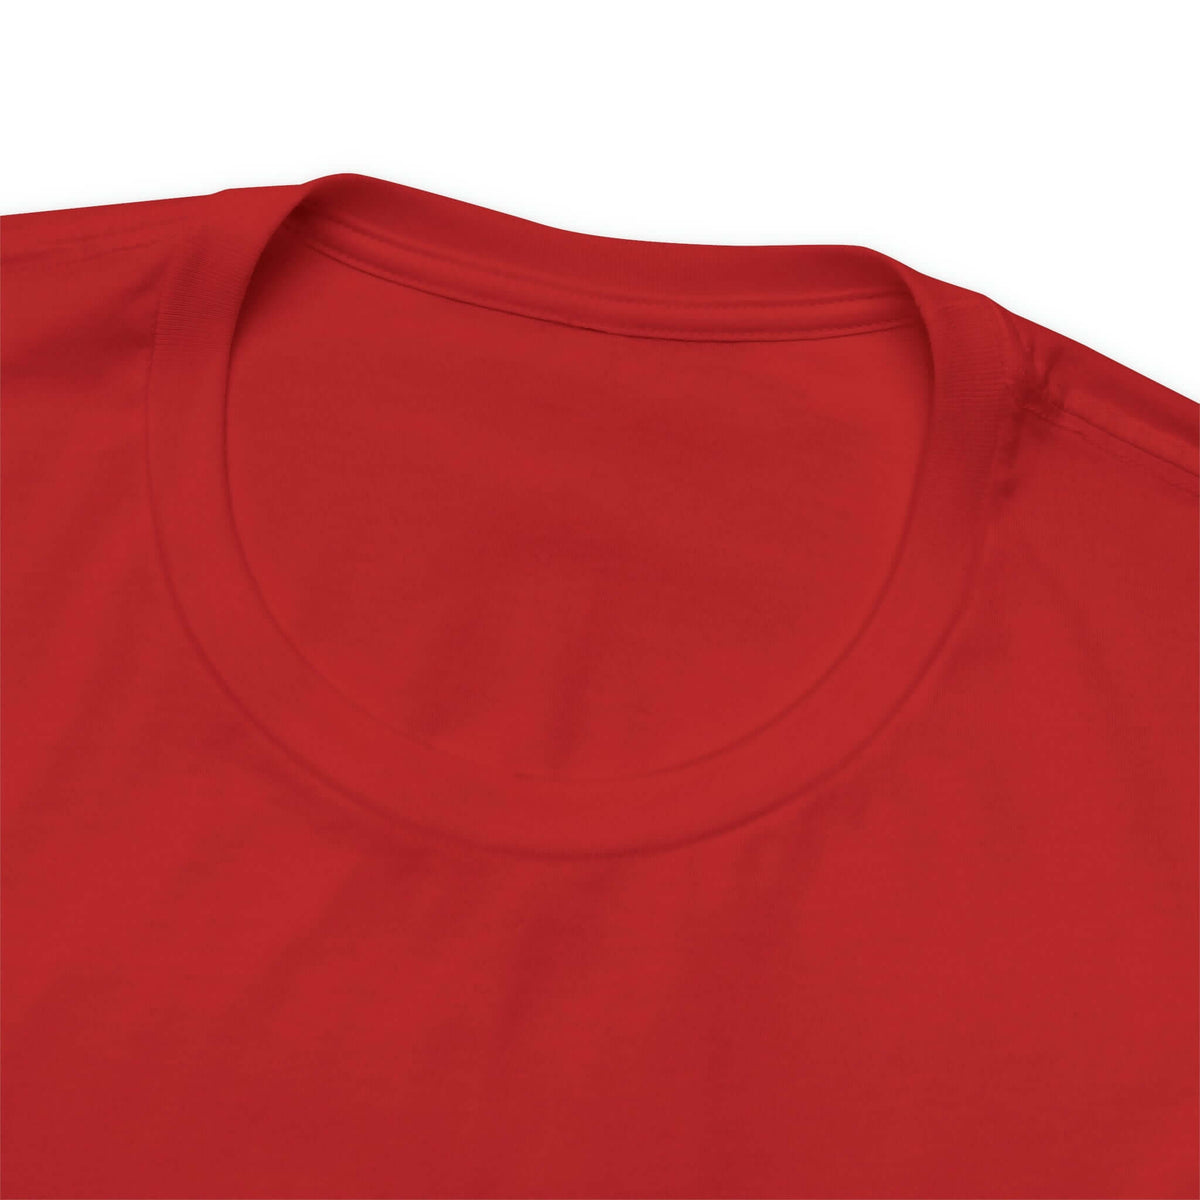 plain dark red t shirt